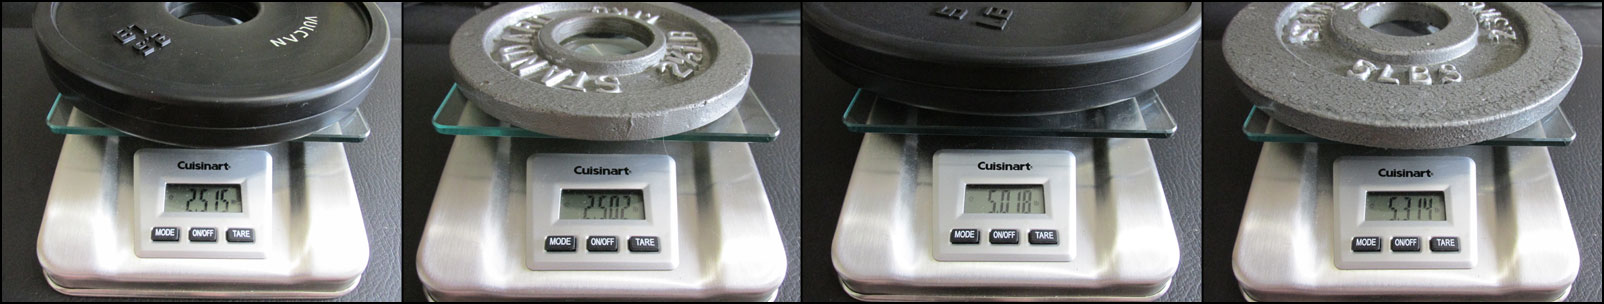 Vulcan V-Lock pound plates vs cast iron plates